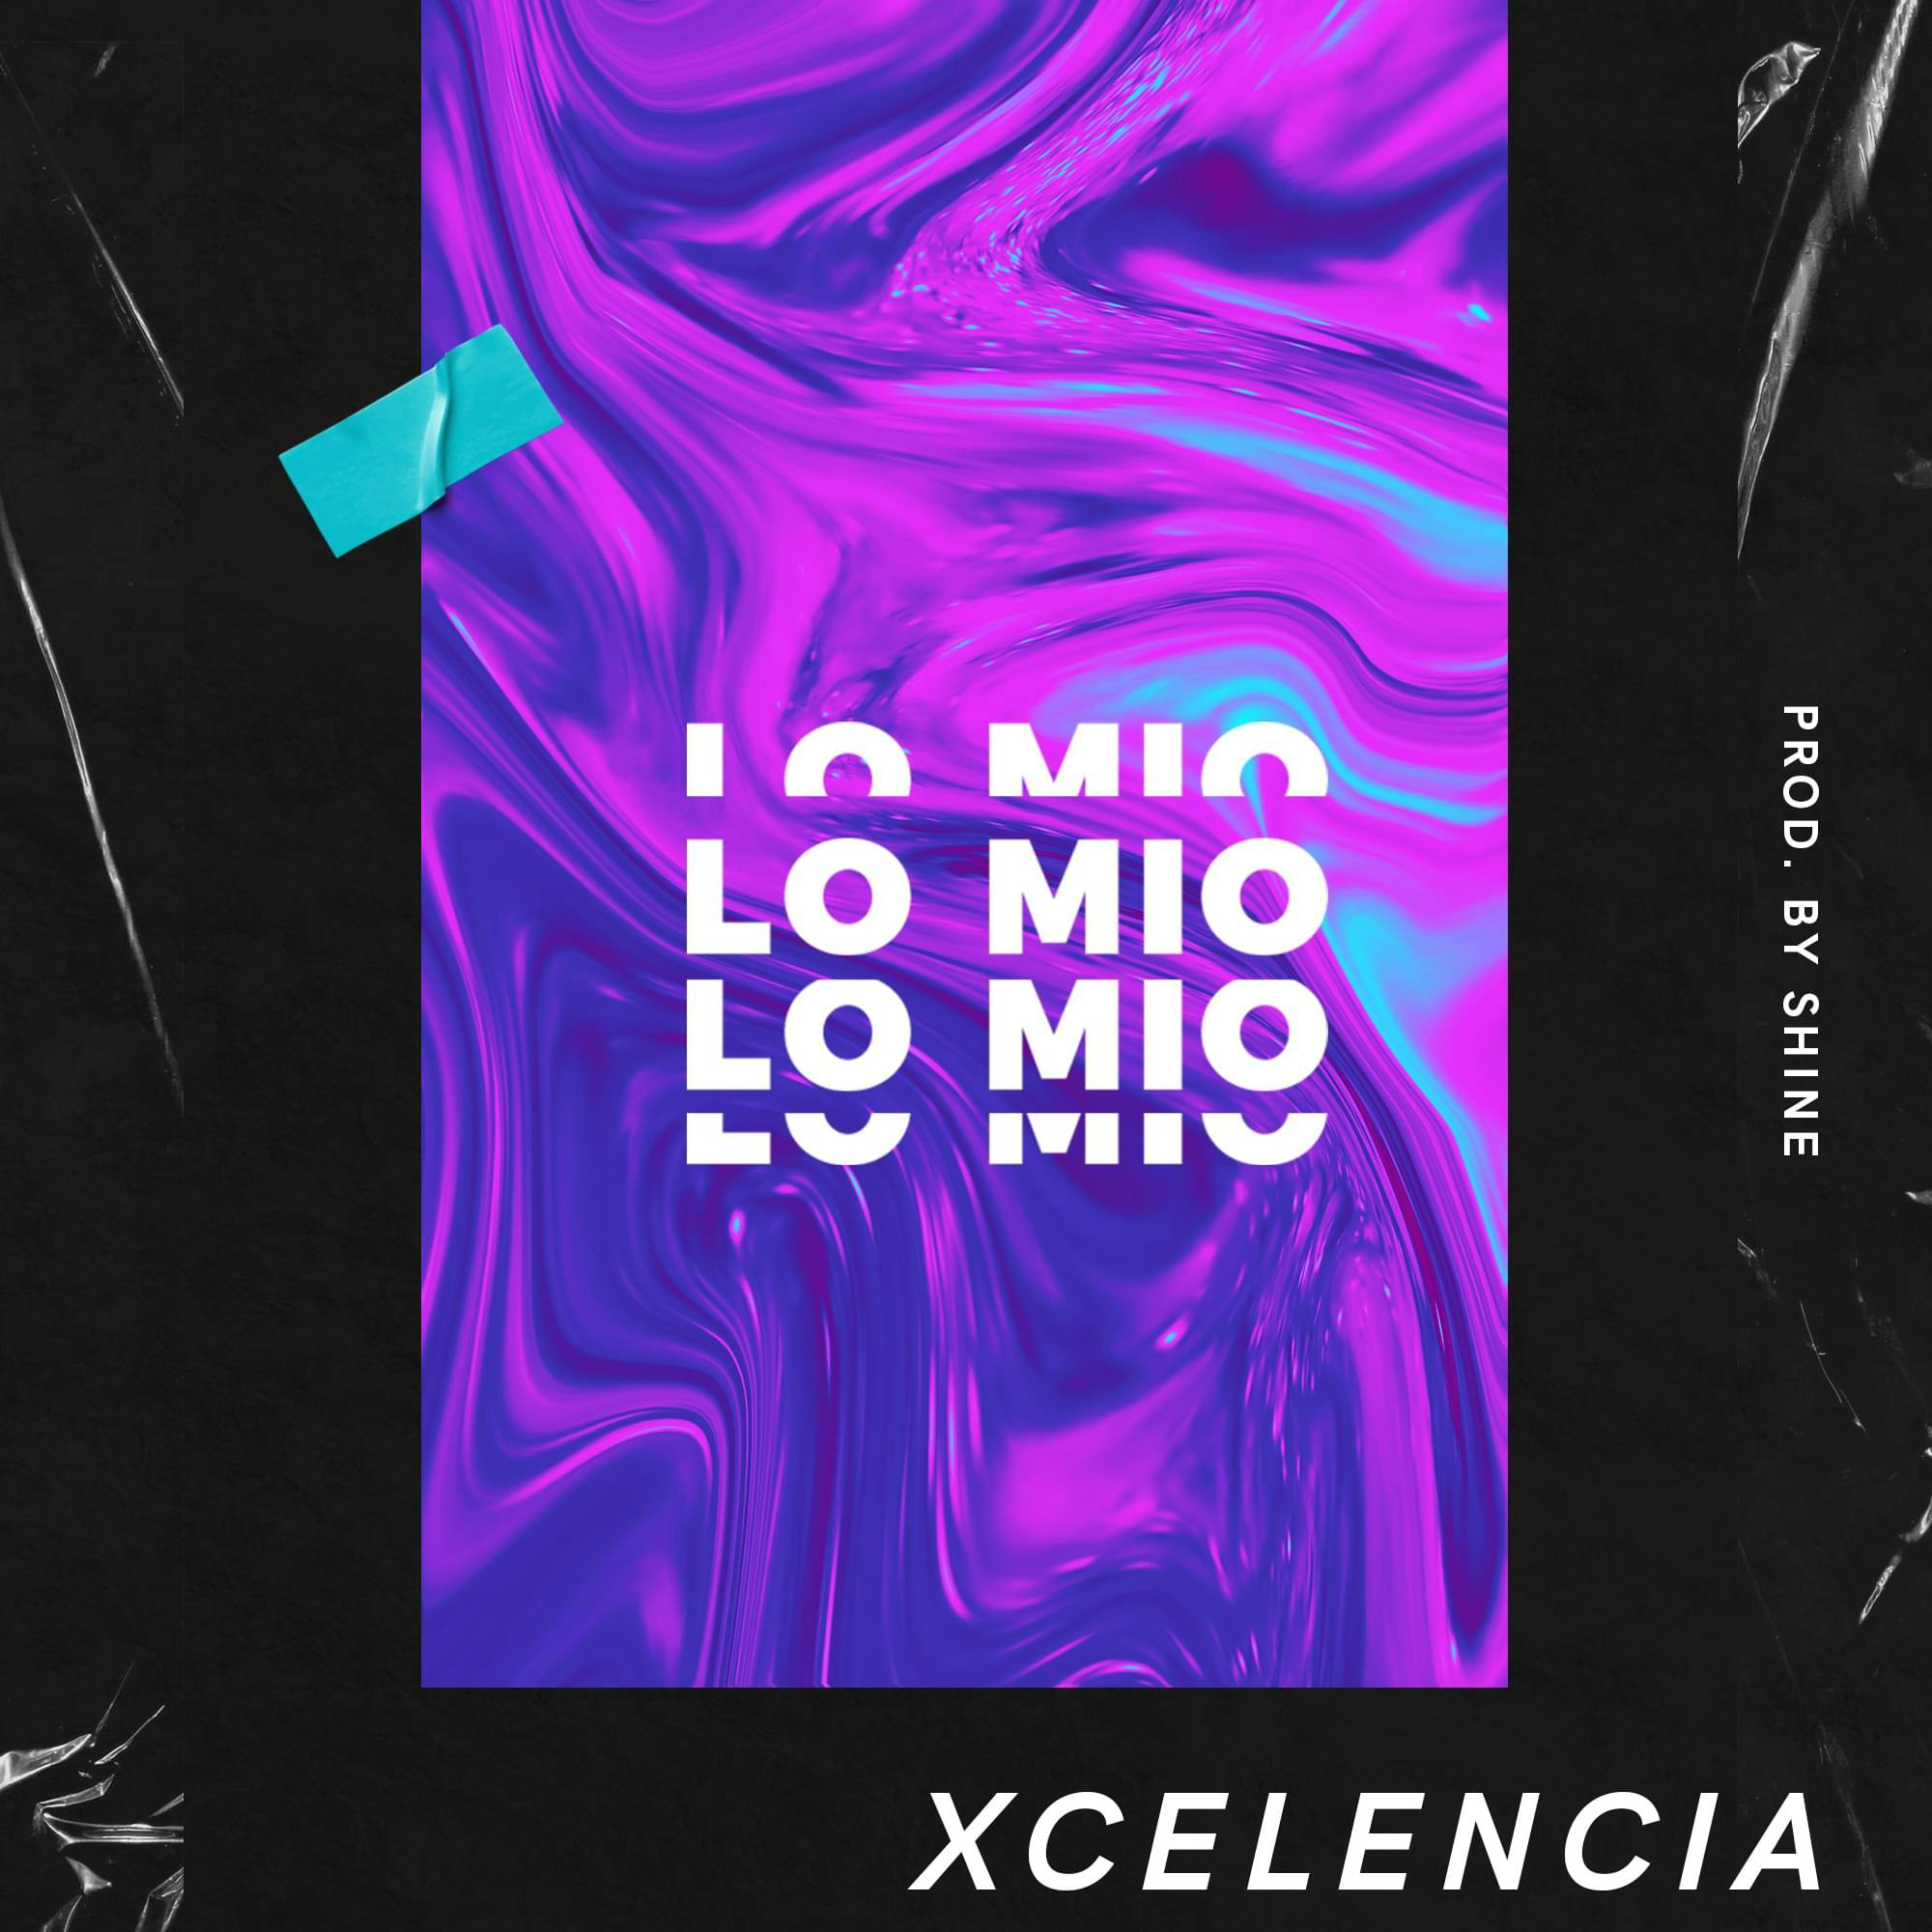 Cover art for Xcelencia's song: lo mio (insomnio)